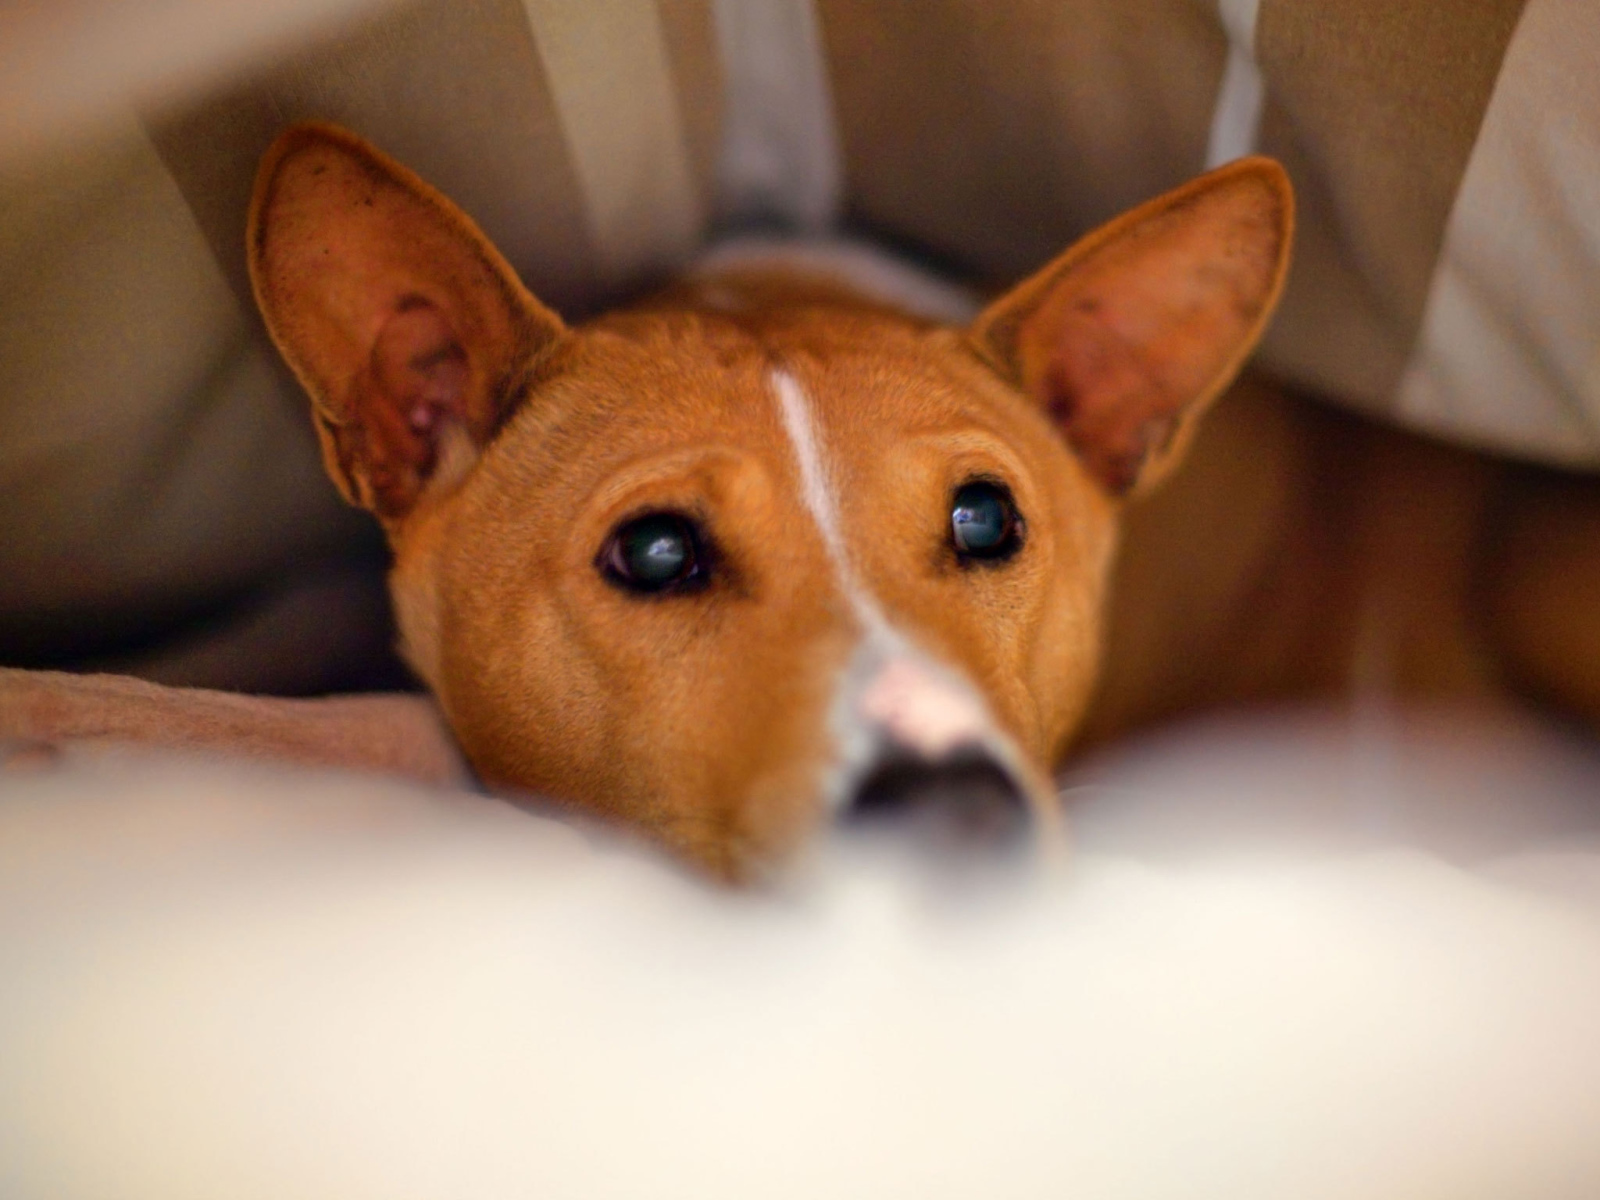 Basenji breed dog hid under a blanket